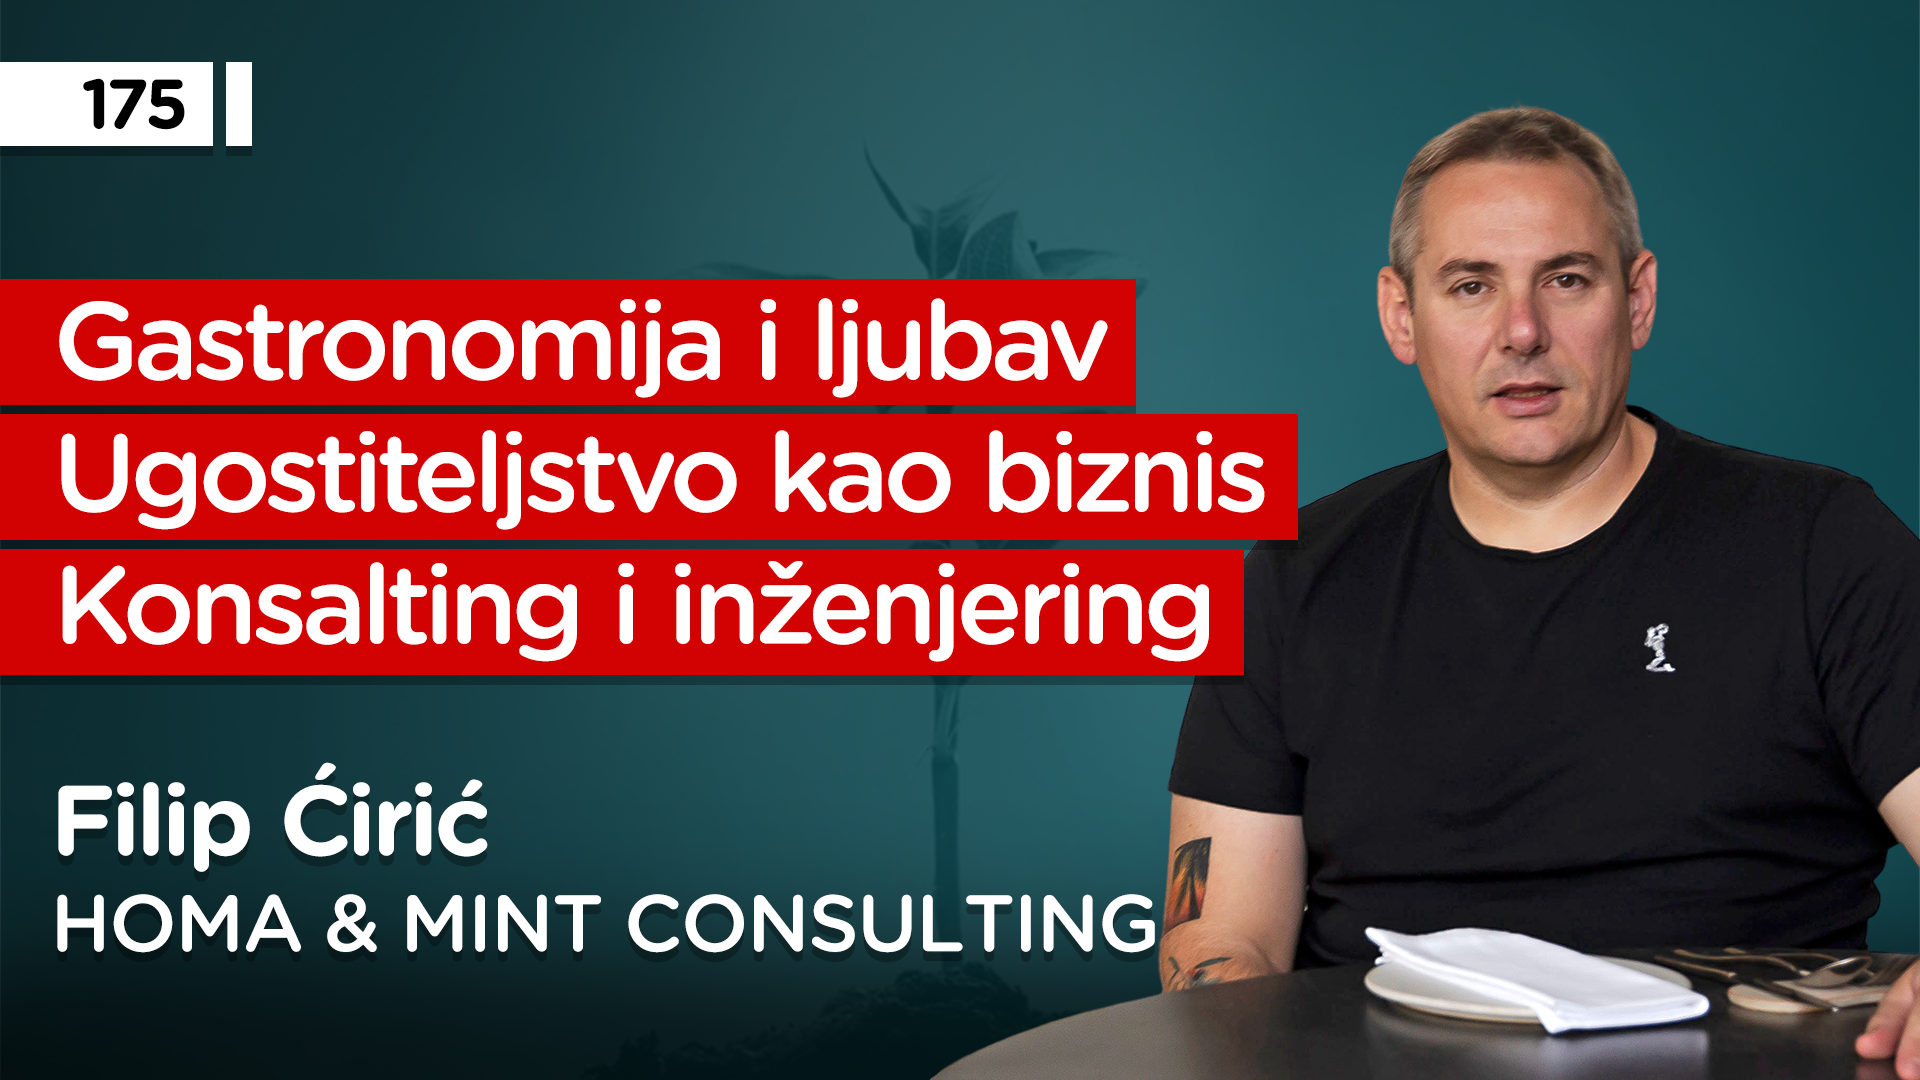 EP175: Filip Ćirić